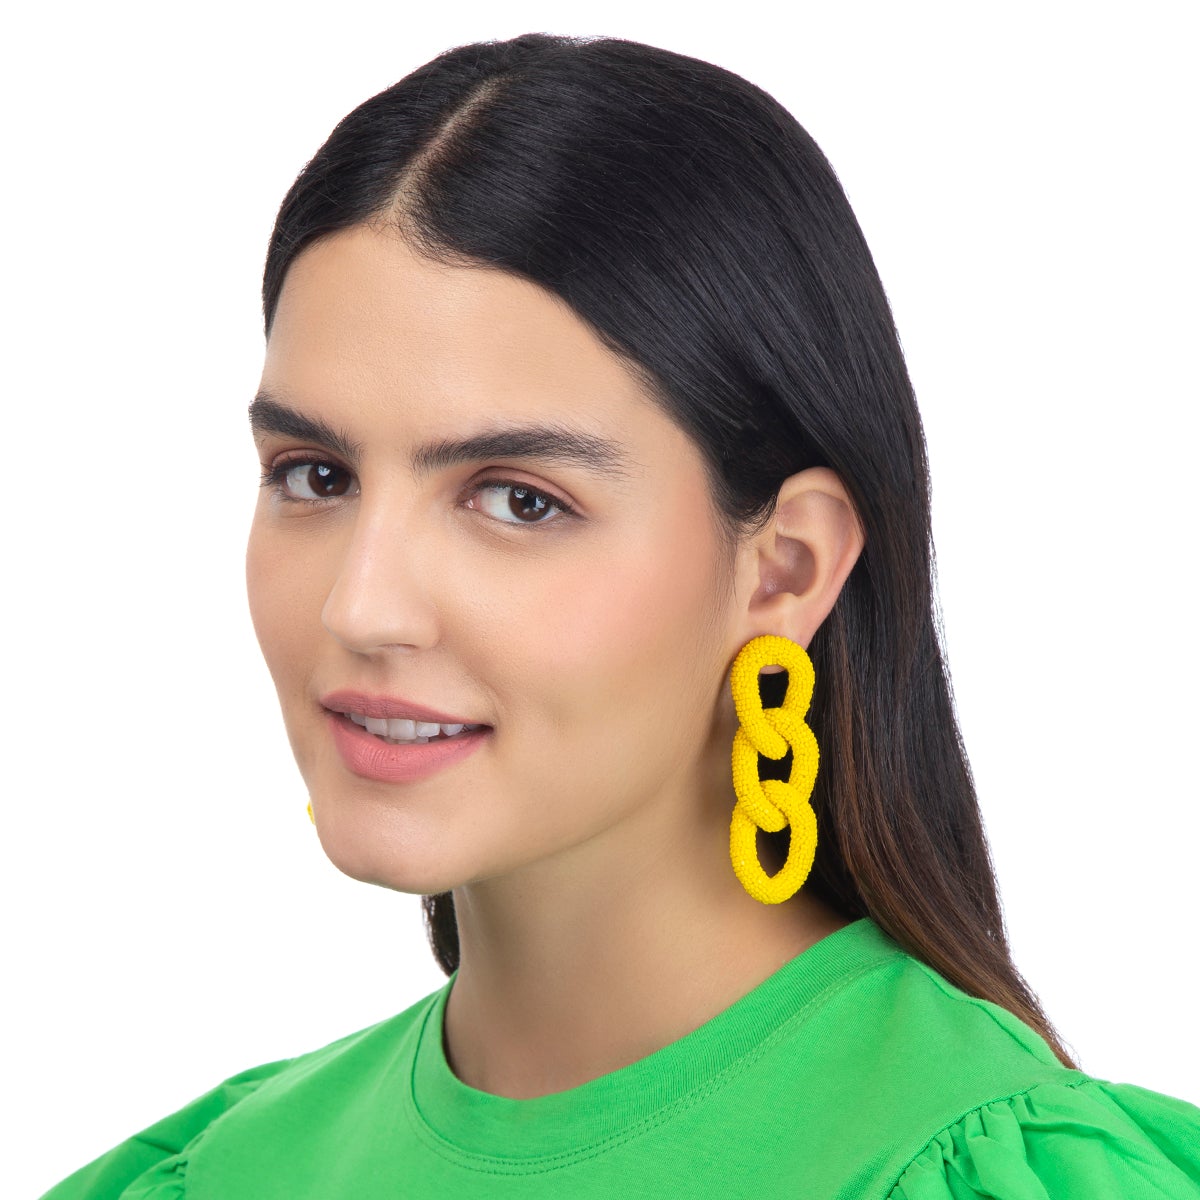 Yellow beaded three link post earrings